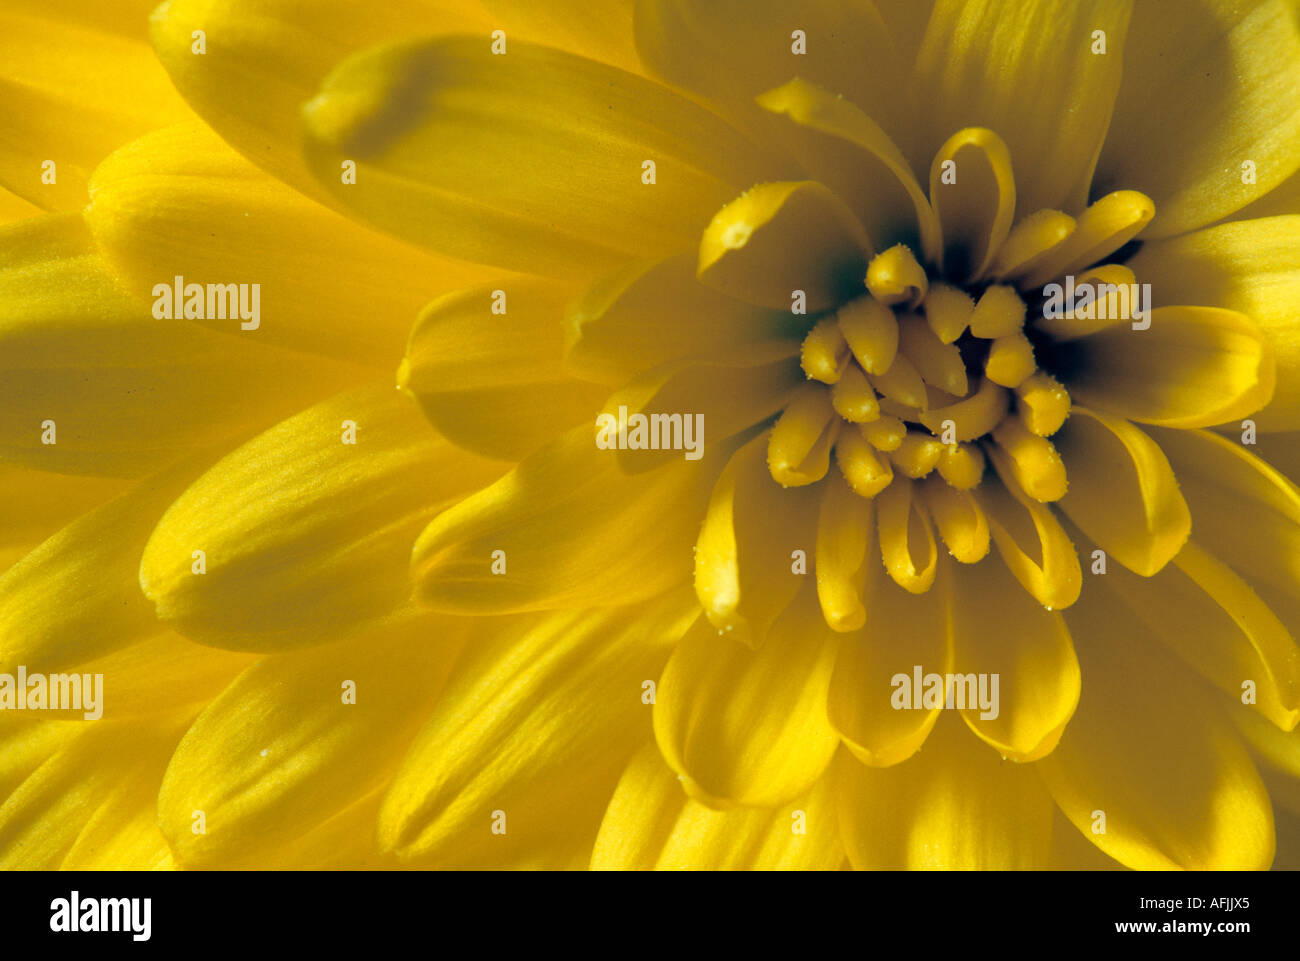 Chrysanthemum, Yellow flower detail, Class 4, Decorative Stock Photo